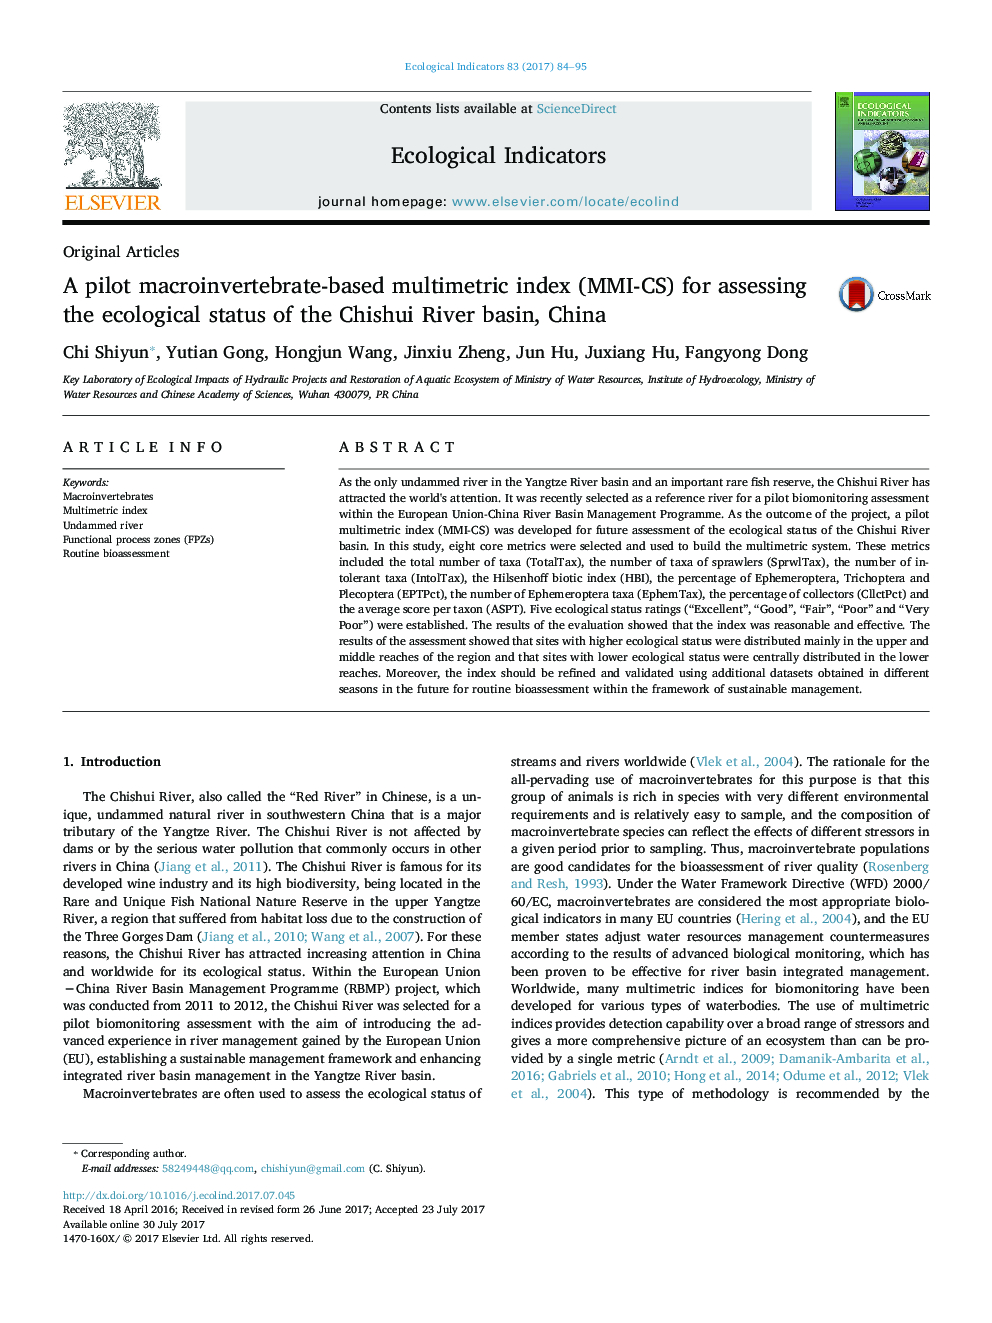 Original ArticlesA pilot macroinvertebrate-based multimetric index (MMI-CS) for assessing the ecological status of the Chishui River basin, China